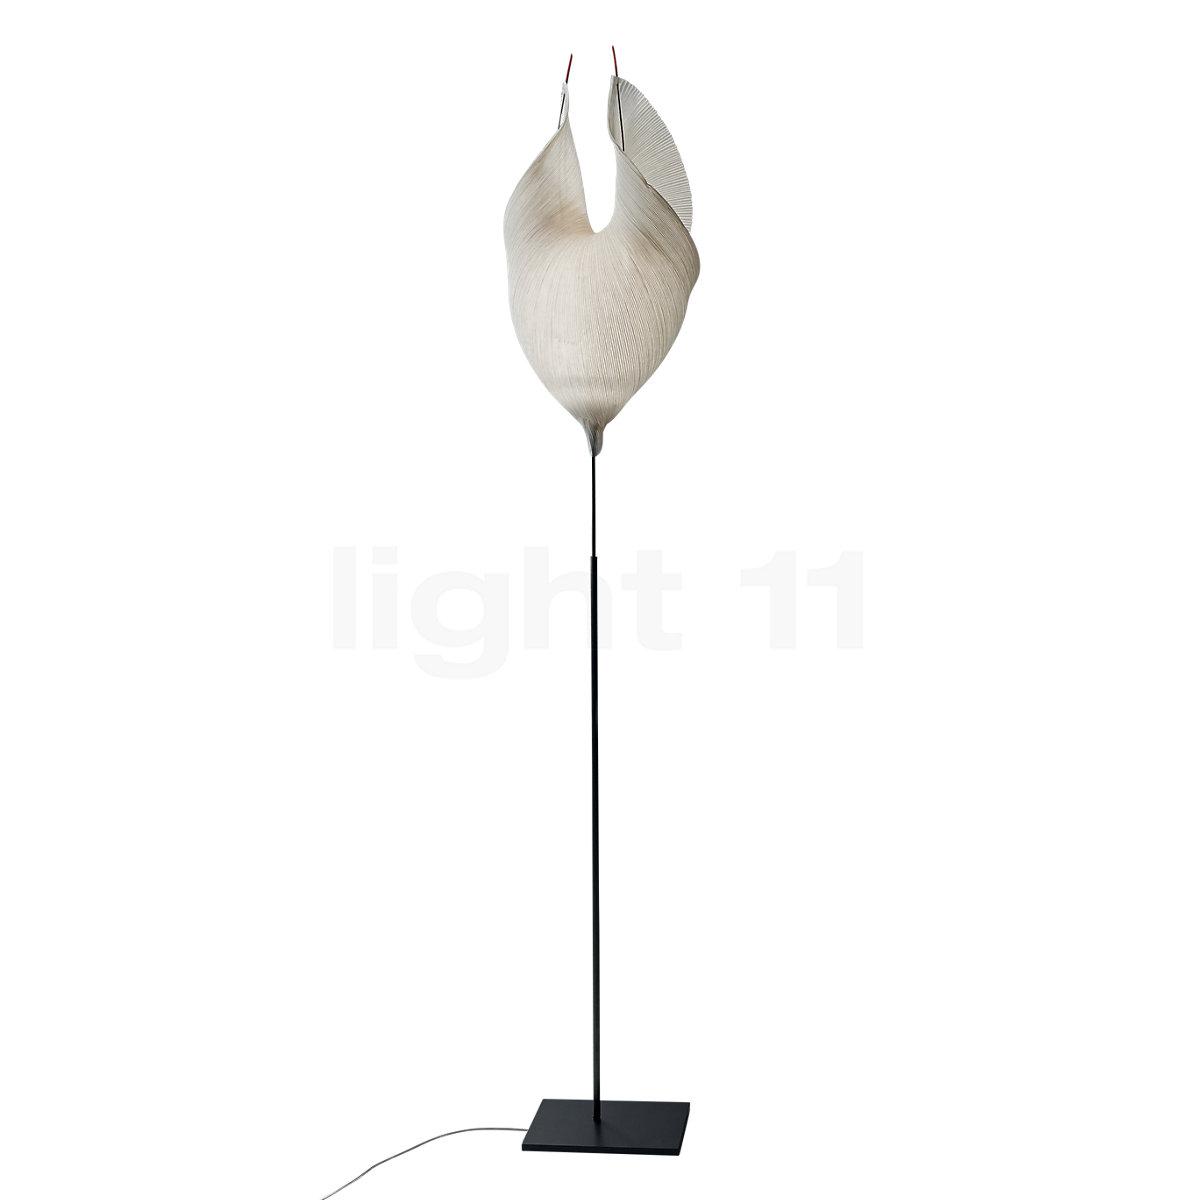 Ingo Maurer Babadul Led At Light11 Eu, Ingo Maurer Table Lamp Paper